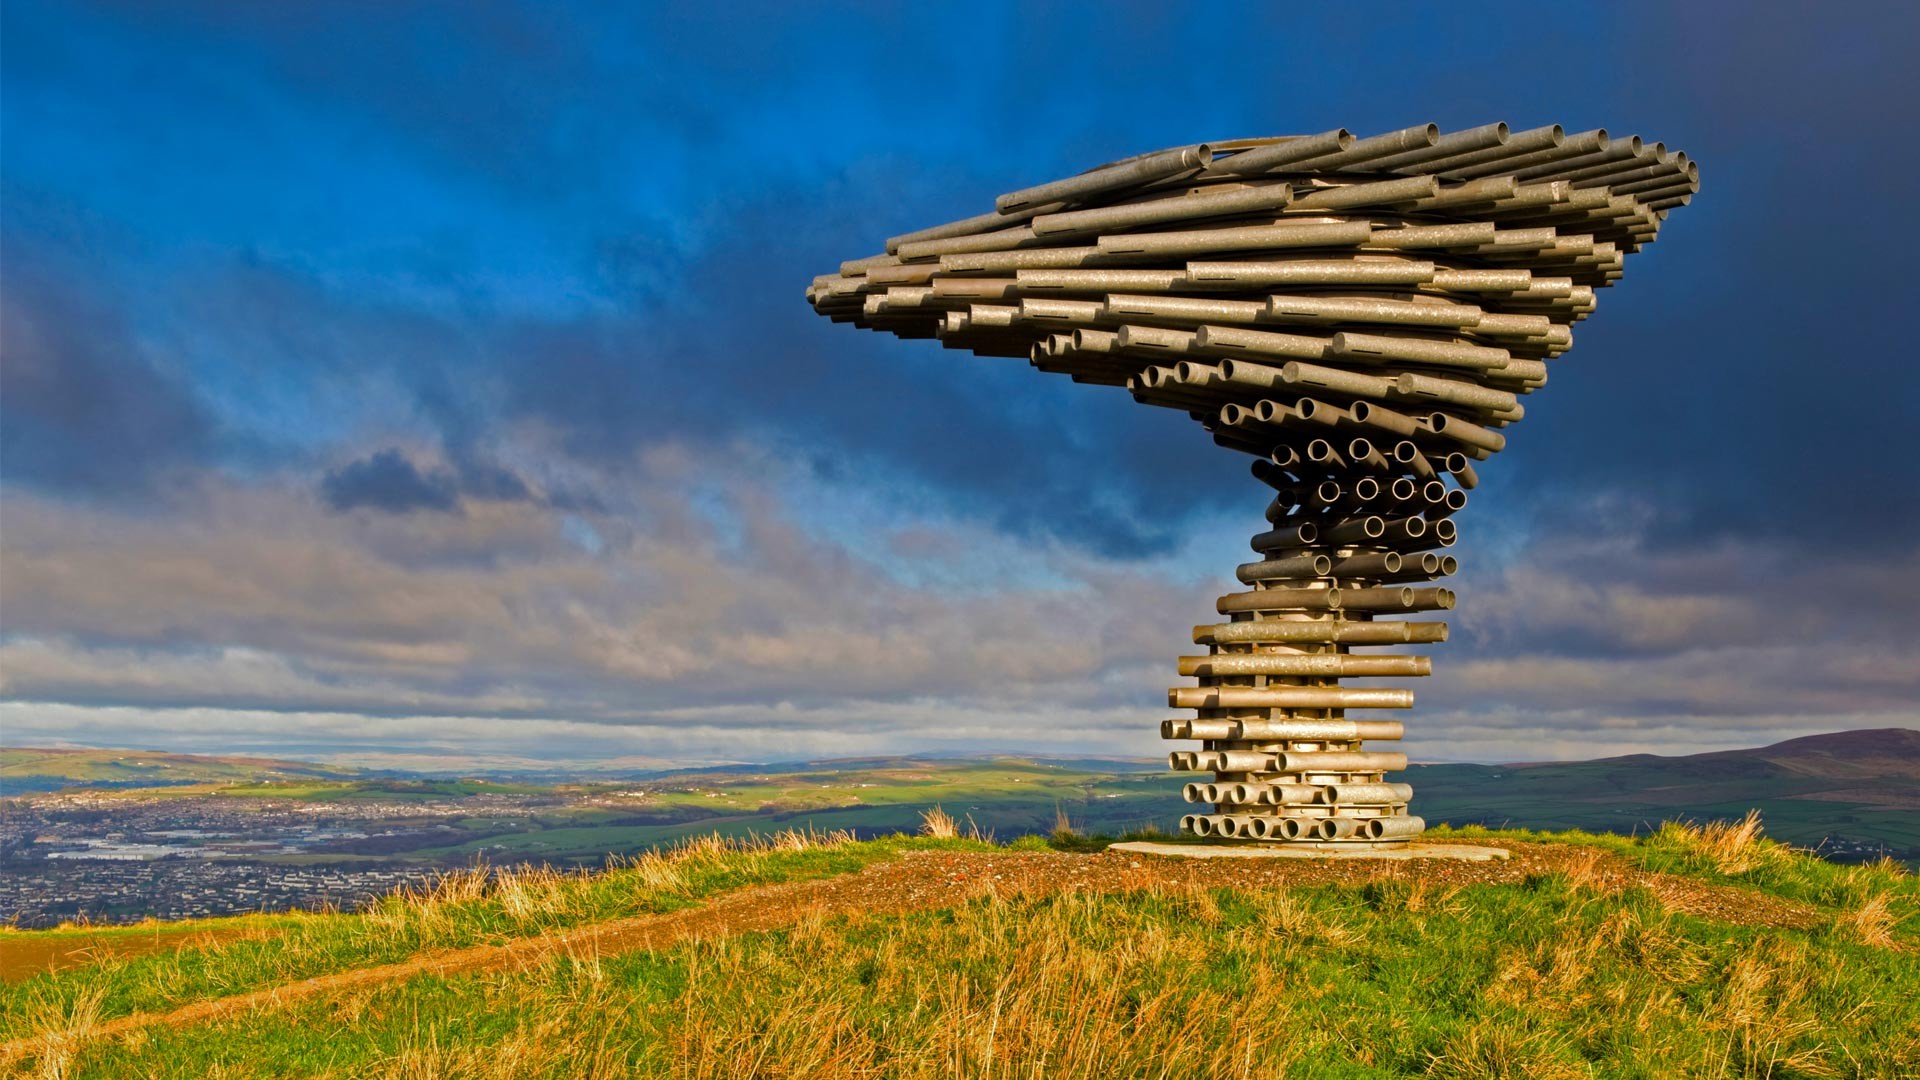 General 1920x1080 landscape clouds England UK hills sculpture pipes artwork grass town